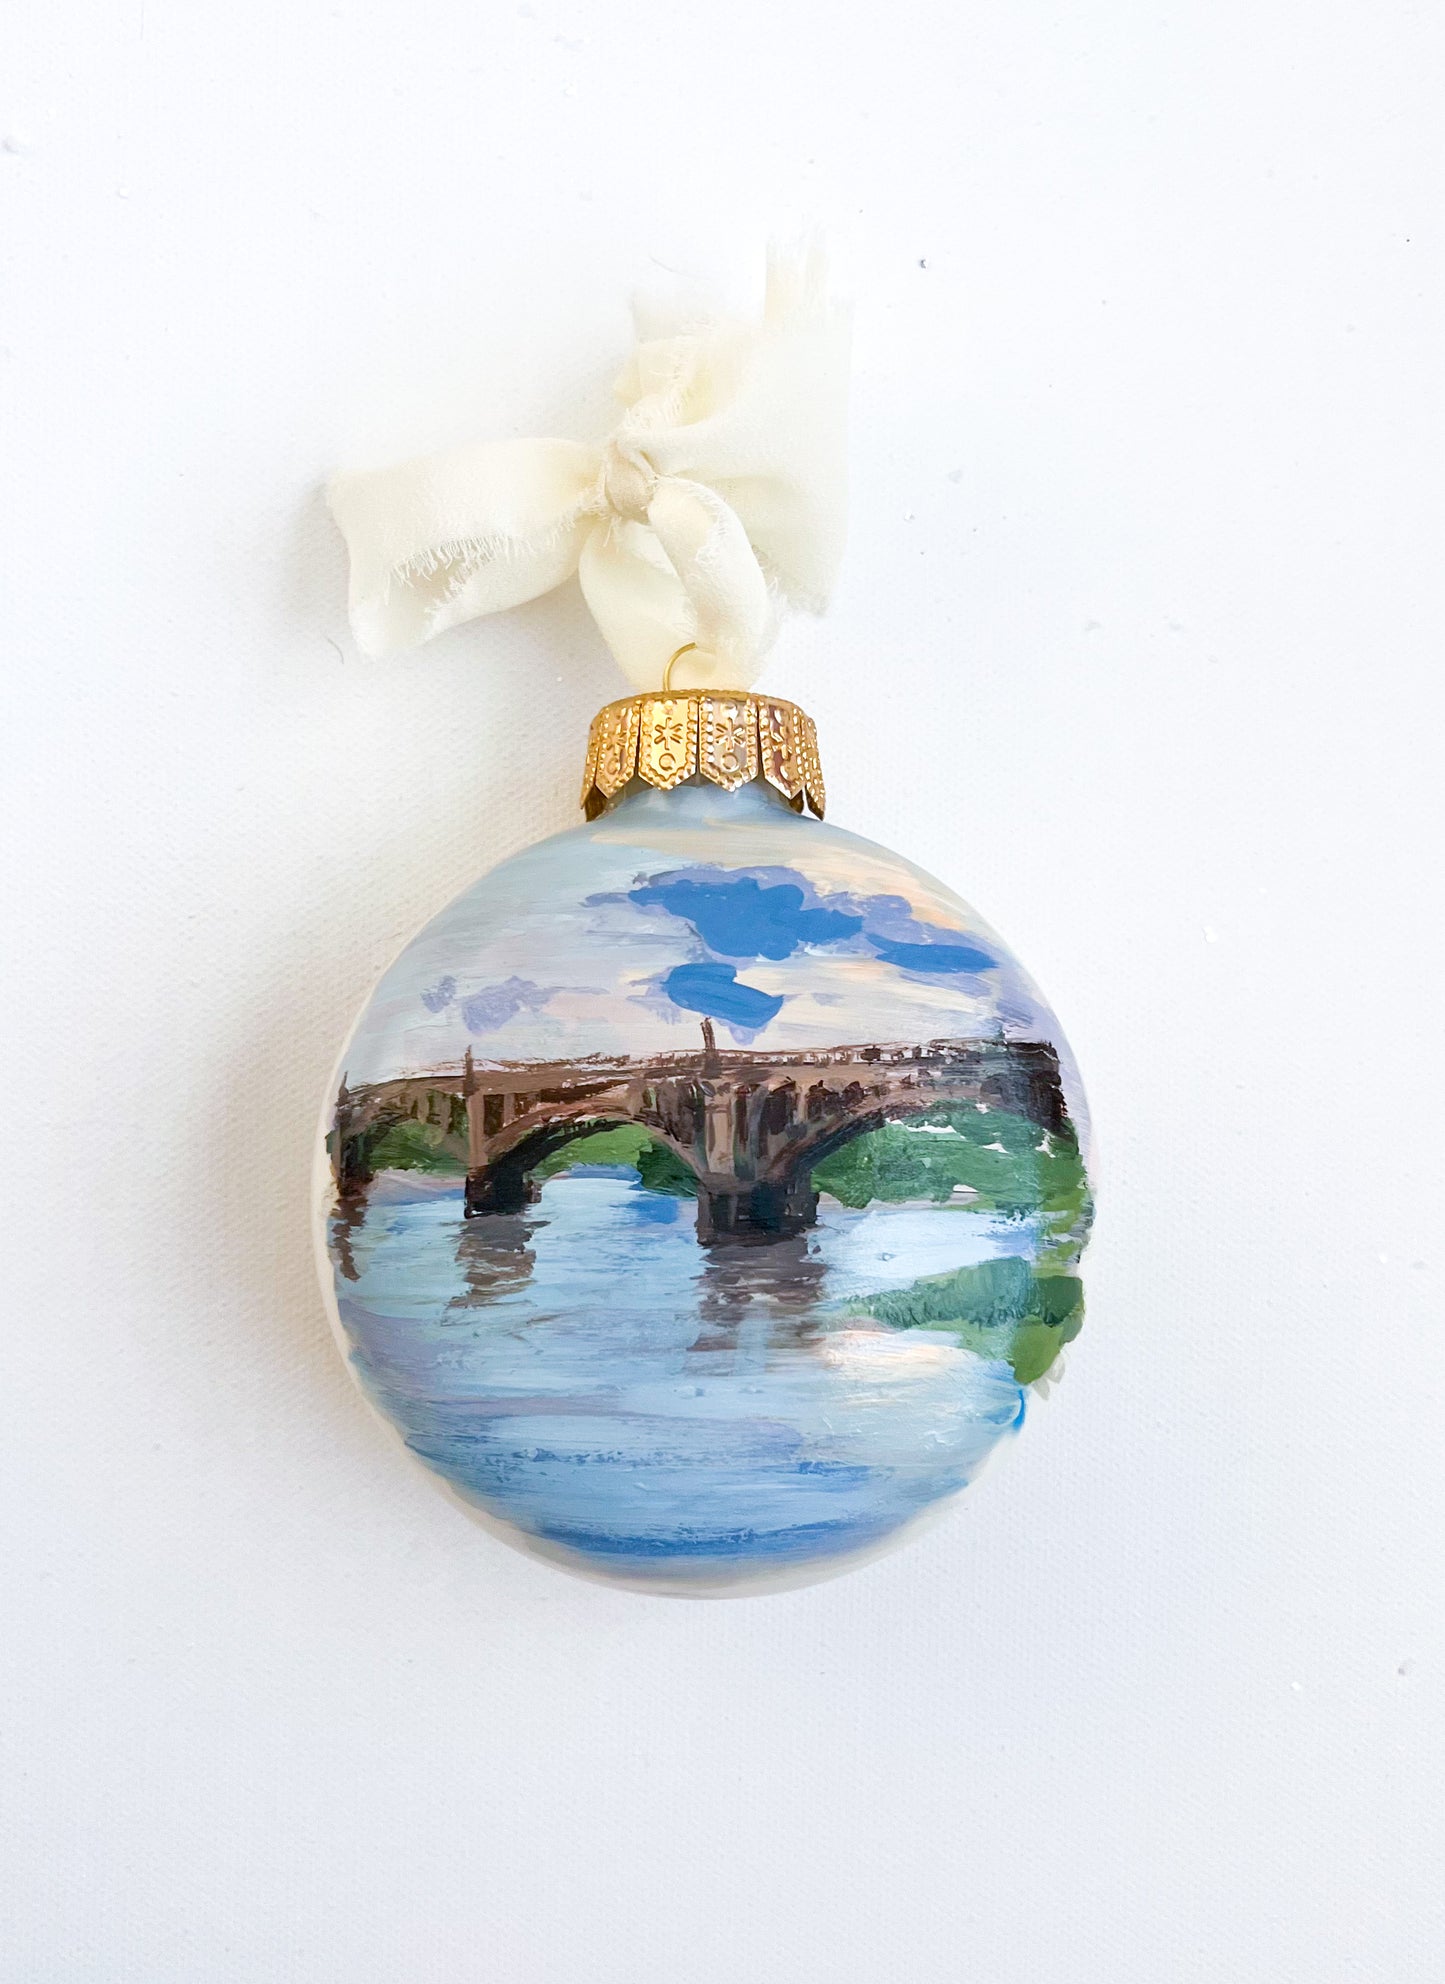 The Gervais Street Bridge Ornament #25